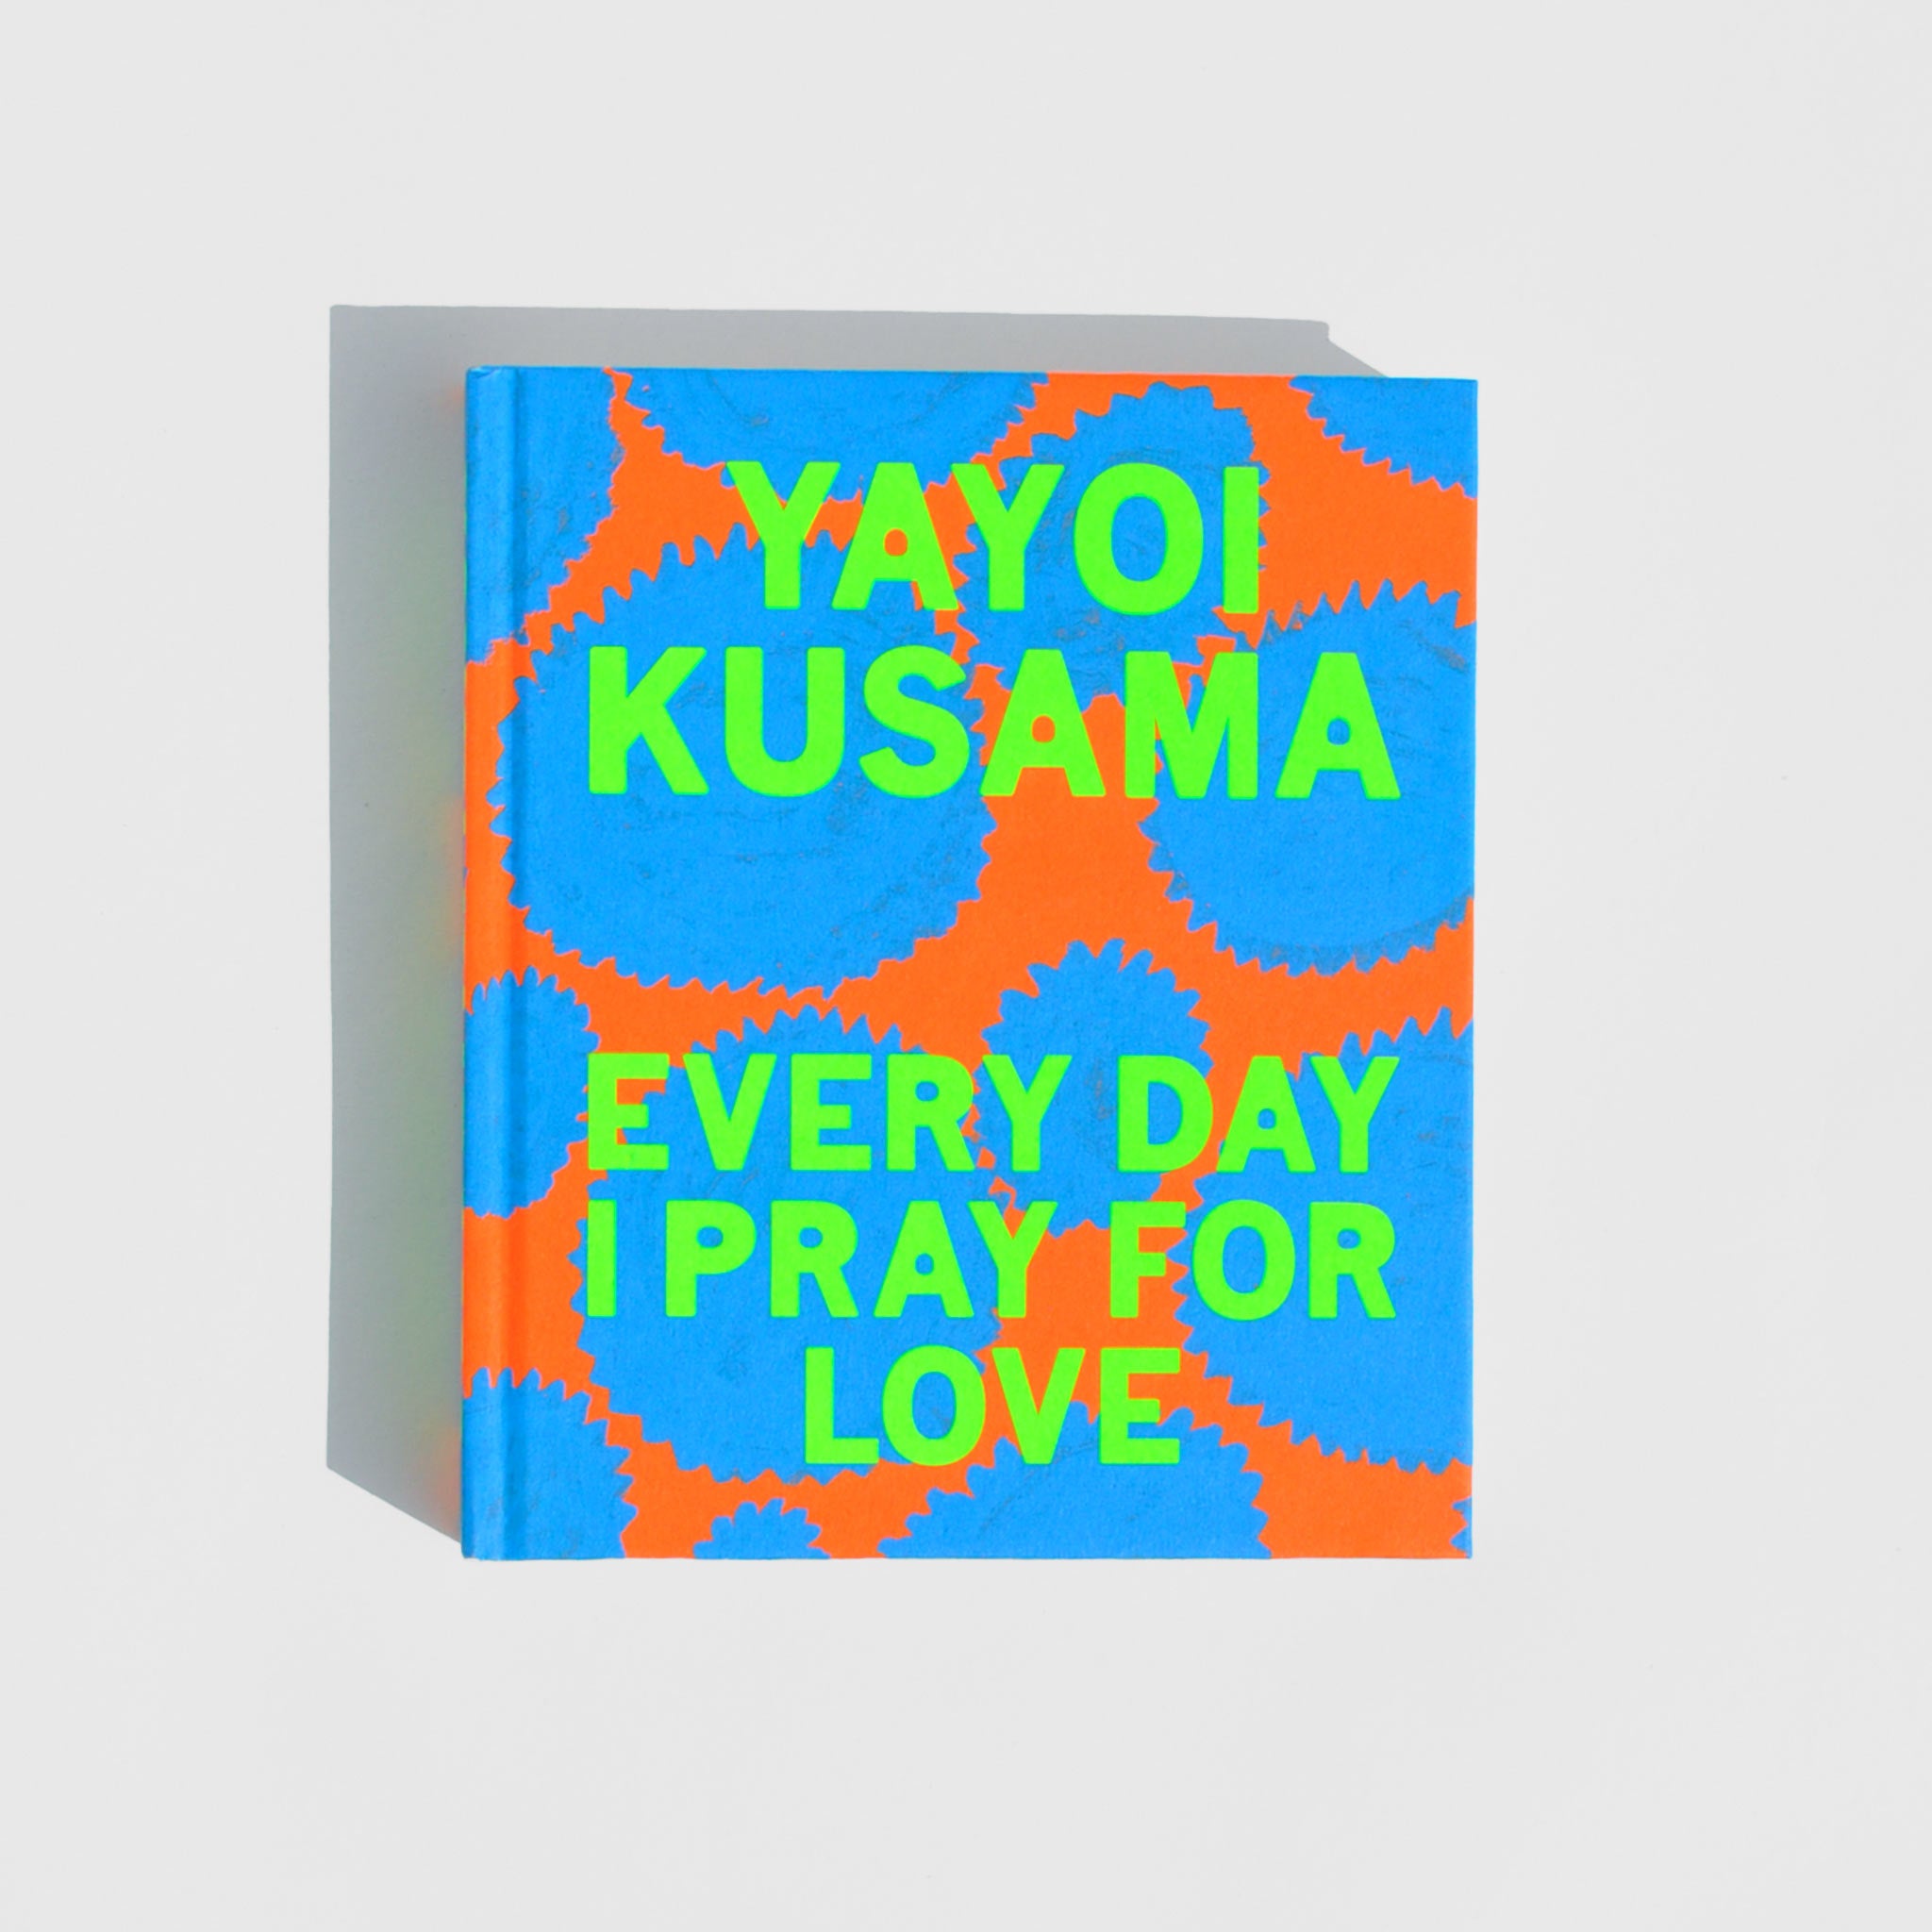 Yayoi Kusama's EVERY DAY I PRAY FOR LOVE - NYC-ARTS